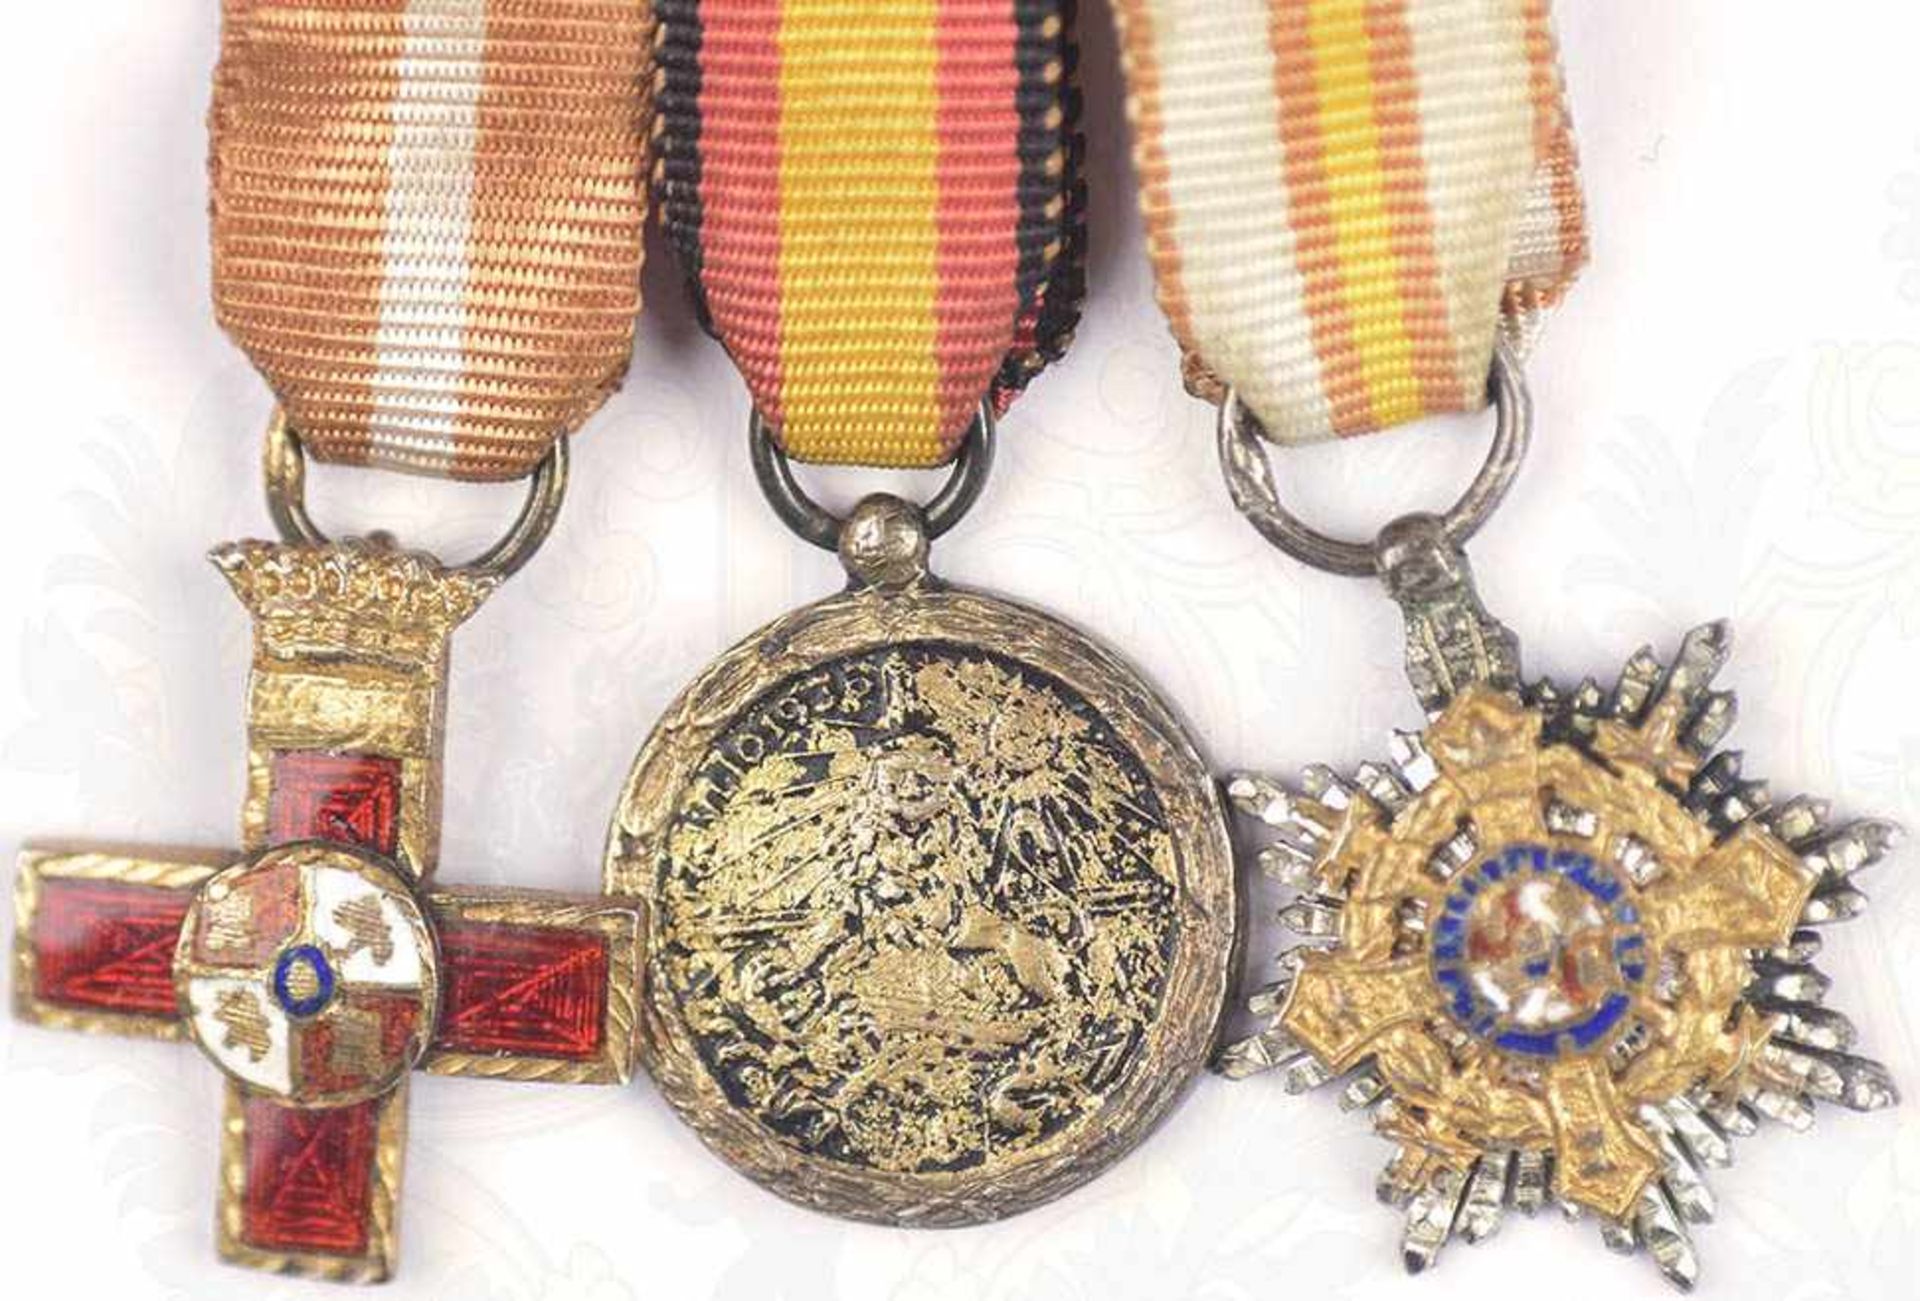 MINIATUR-ORDENSPANGE, Militärverdienstorden/Medaille de la Campagna/Siegeskreuz Cruz de Guerra, - Bild 2 aus 3